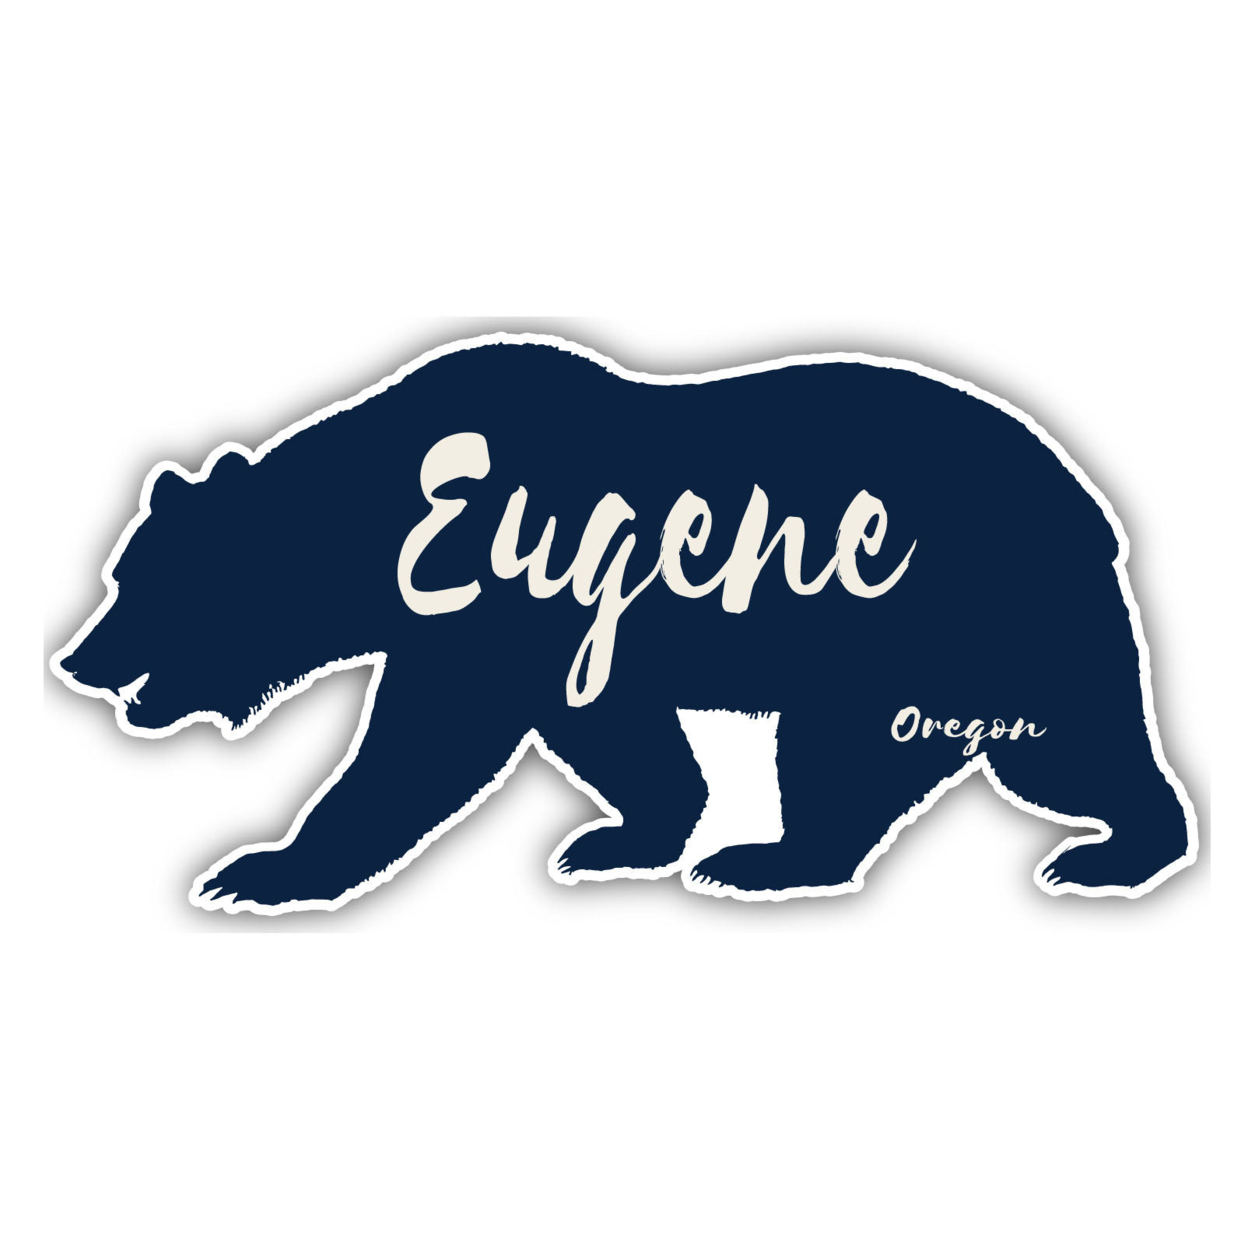 Eugene Oregon Souvenir Decorative Stickers (Choose Theme And Size) - Single Unit, 10-Inch, Bear